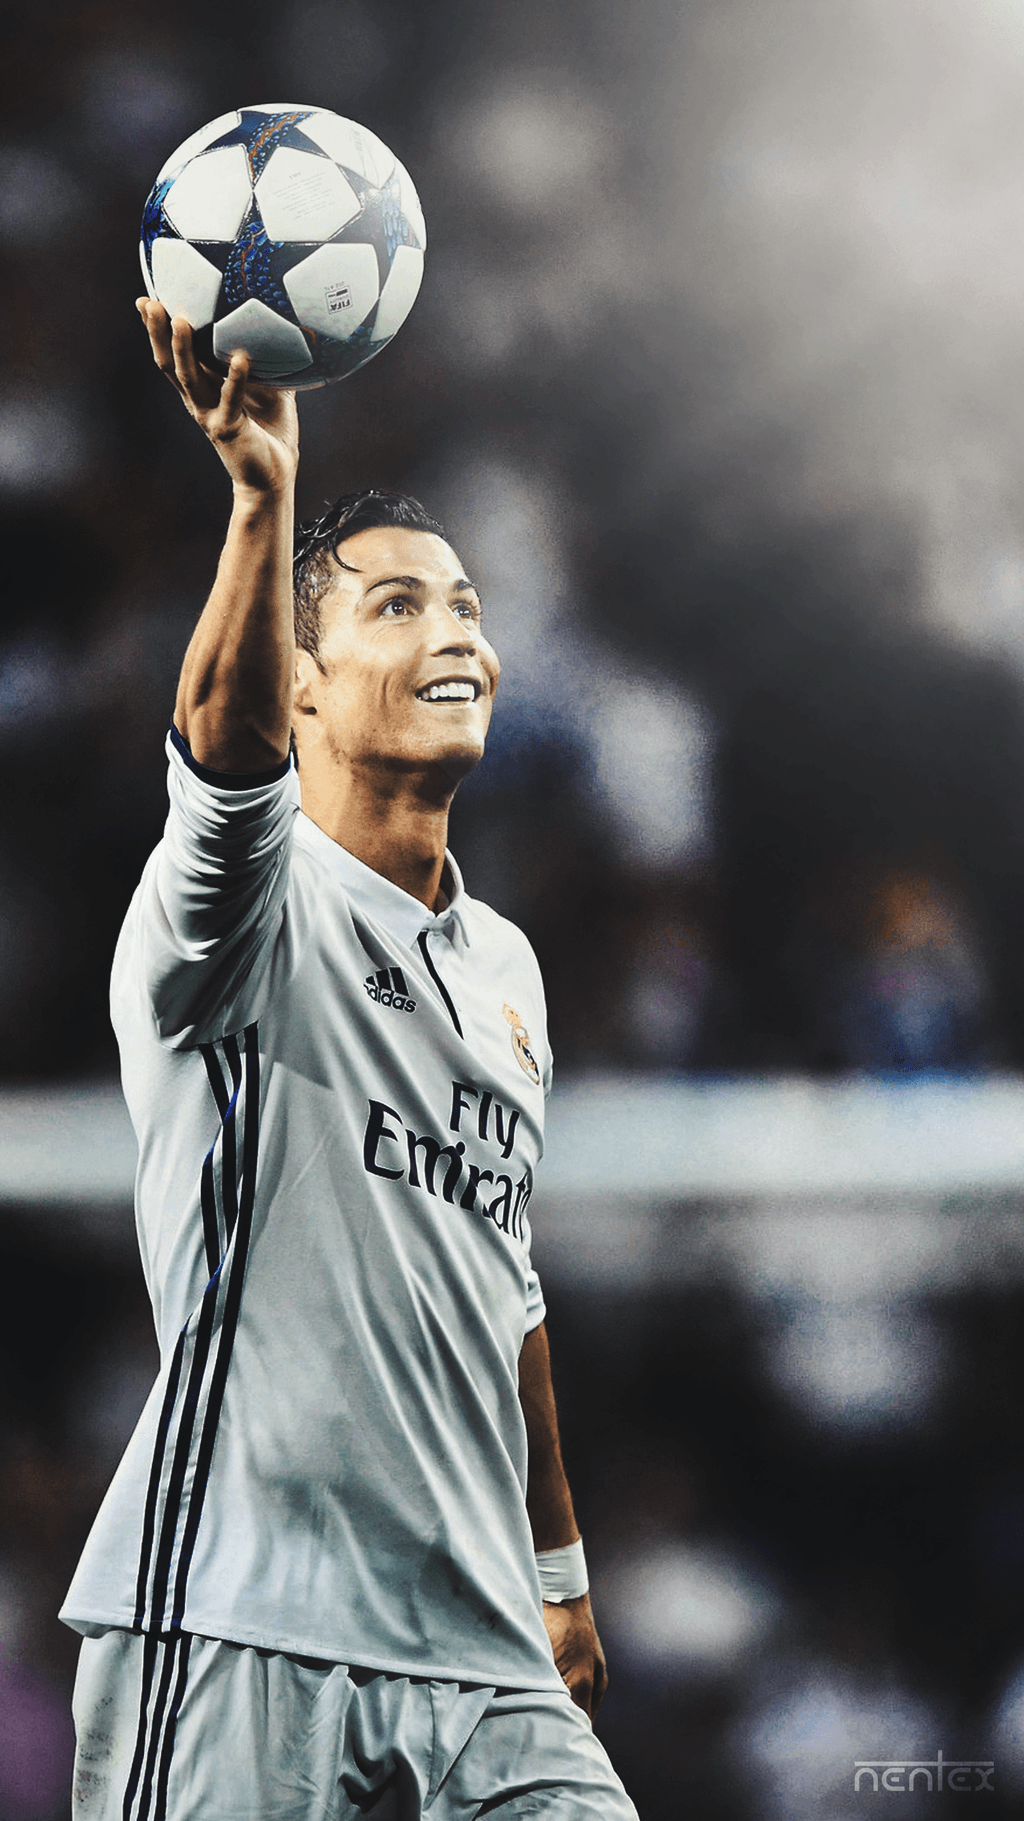 Fredrik on Twitter Cristiano Ronaldo 𝐱 iOS 16 wallpapers  httpstcoRsgOGHxnqH  Twitter